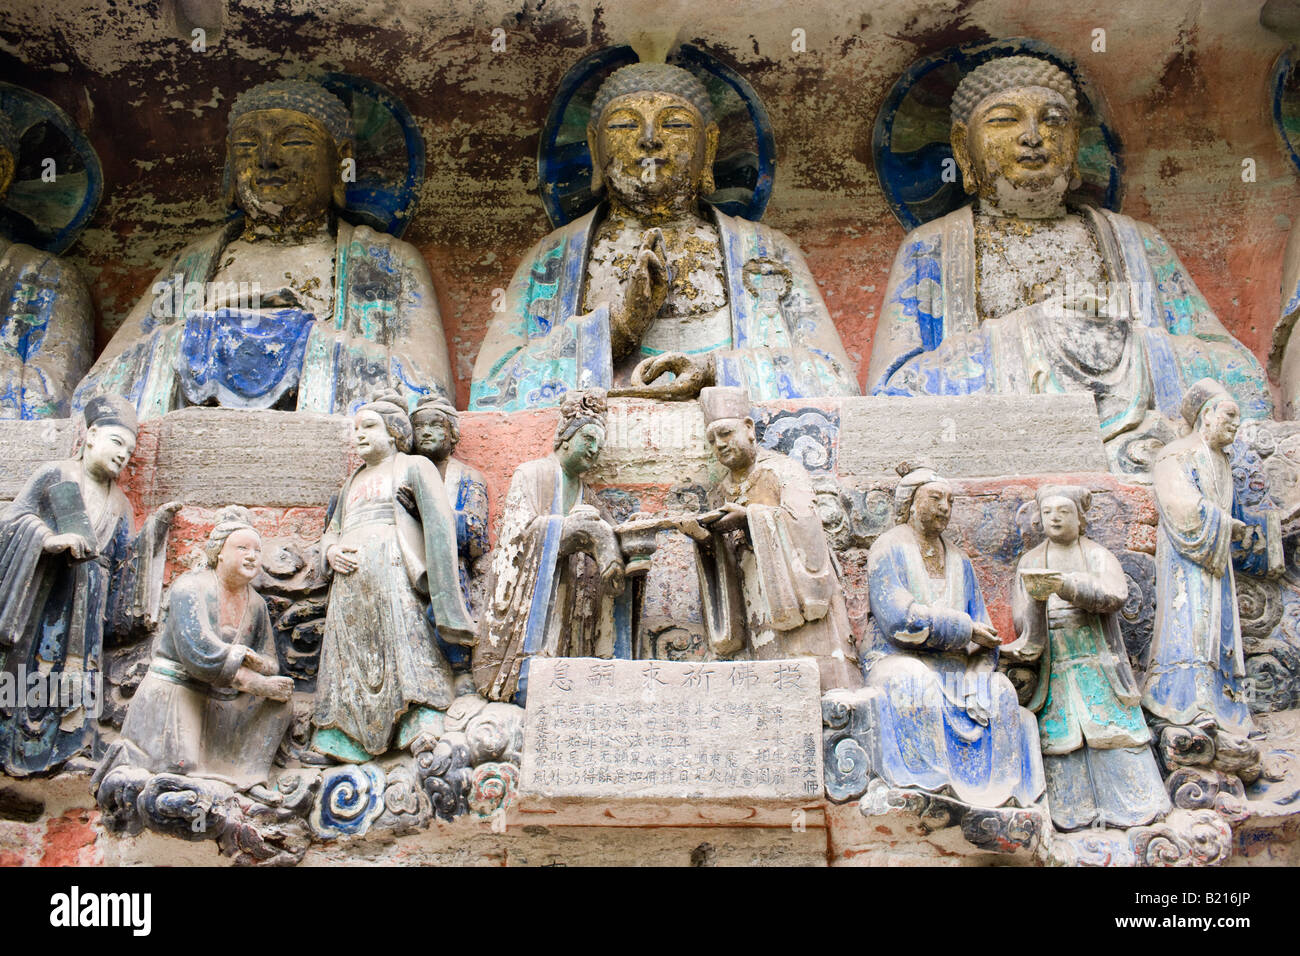 Dazu rock carvings buddhas and religious scene at Mount Baoding Chongqing China Stock Photo